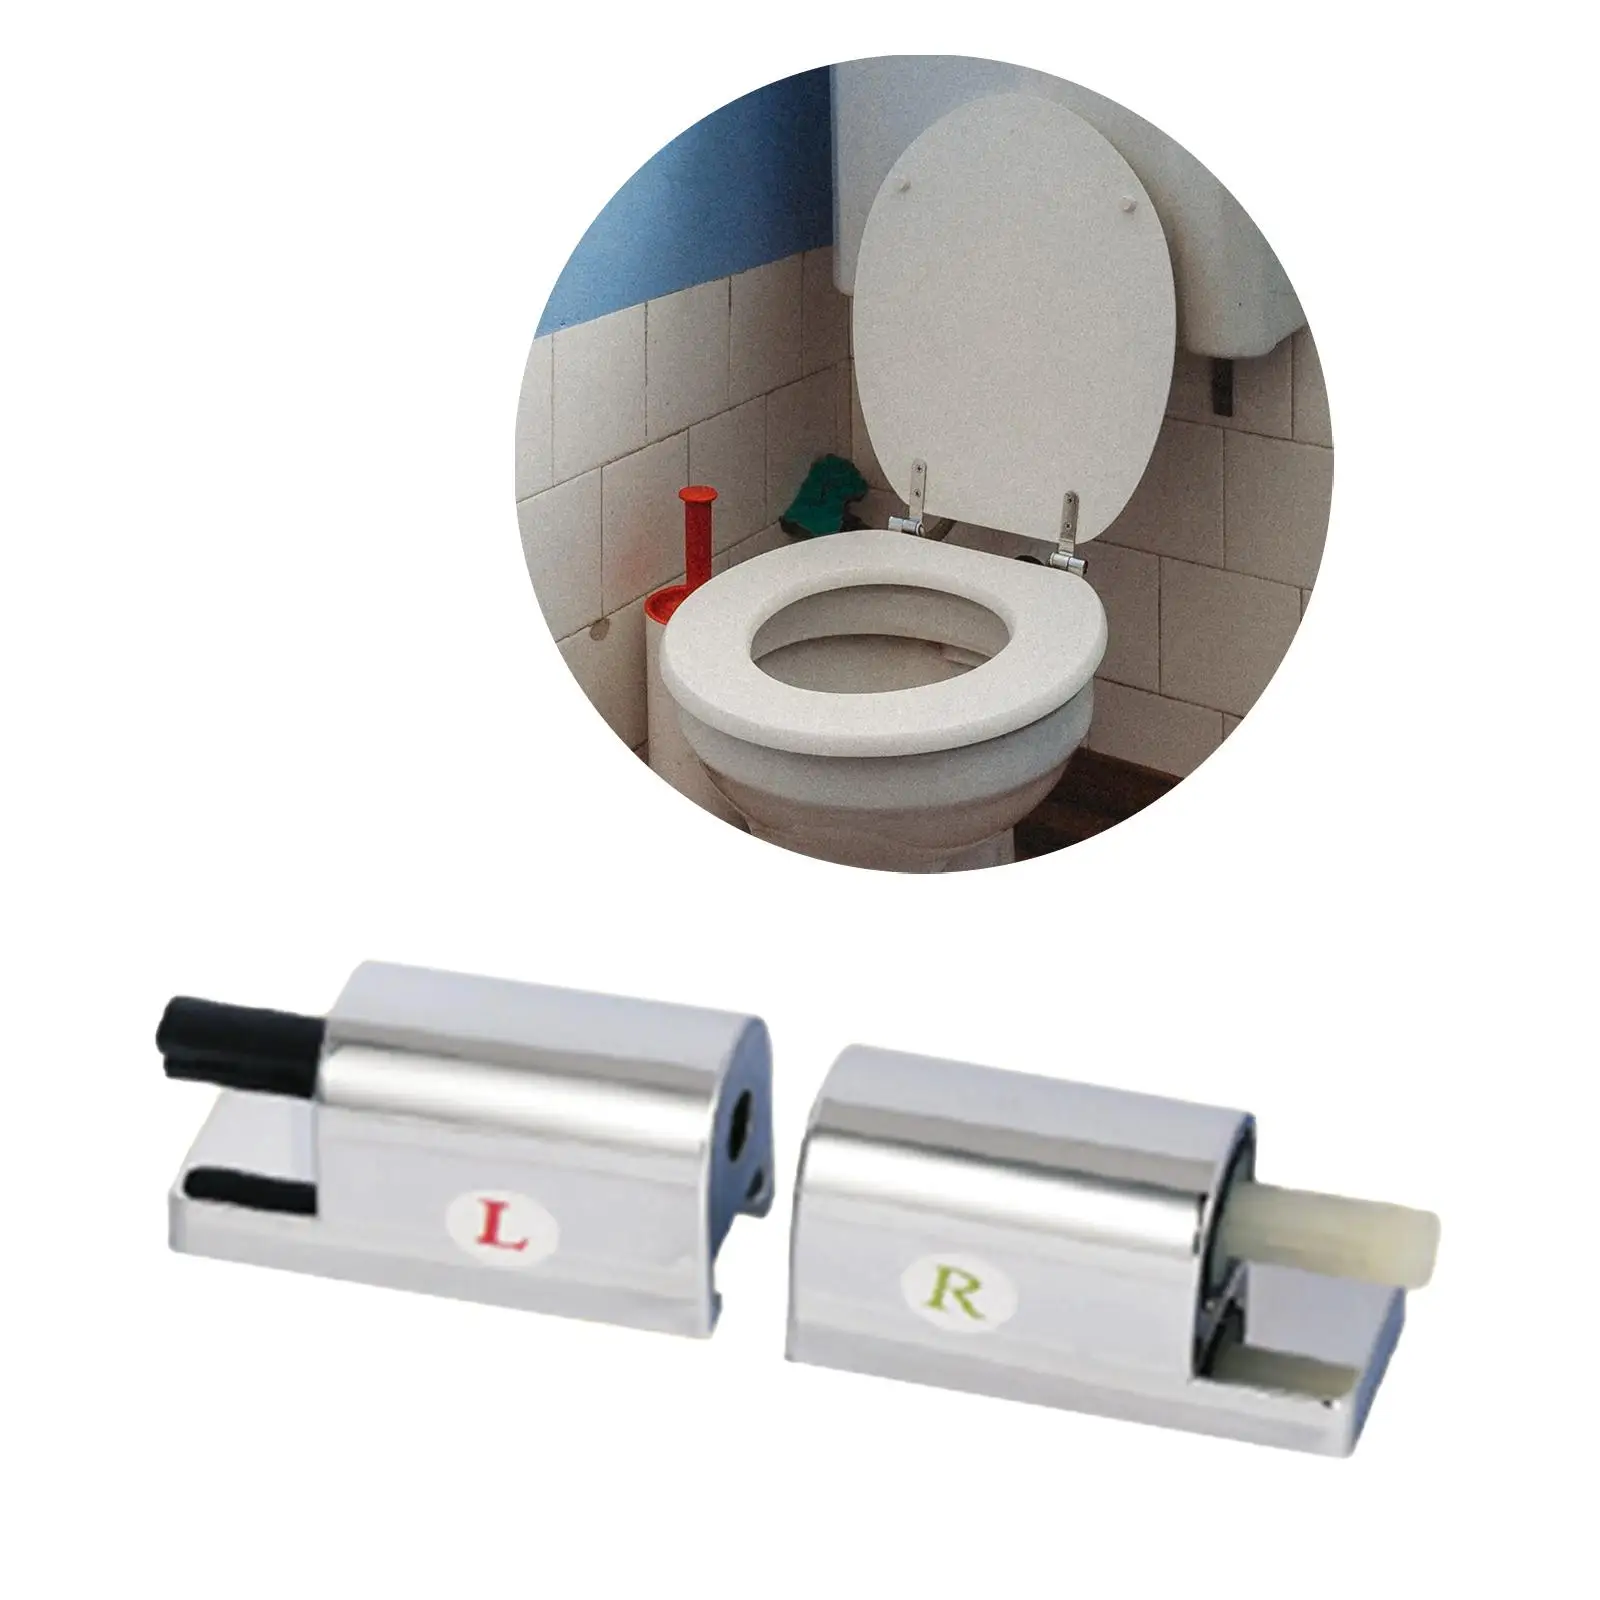 2 Pieces Toilet Seat Hinge Easy Installation Fixtures Fitments Toilet Seat